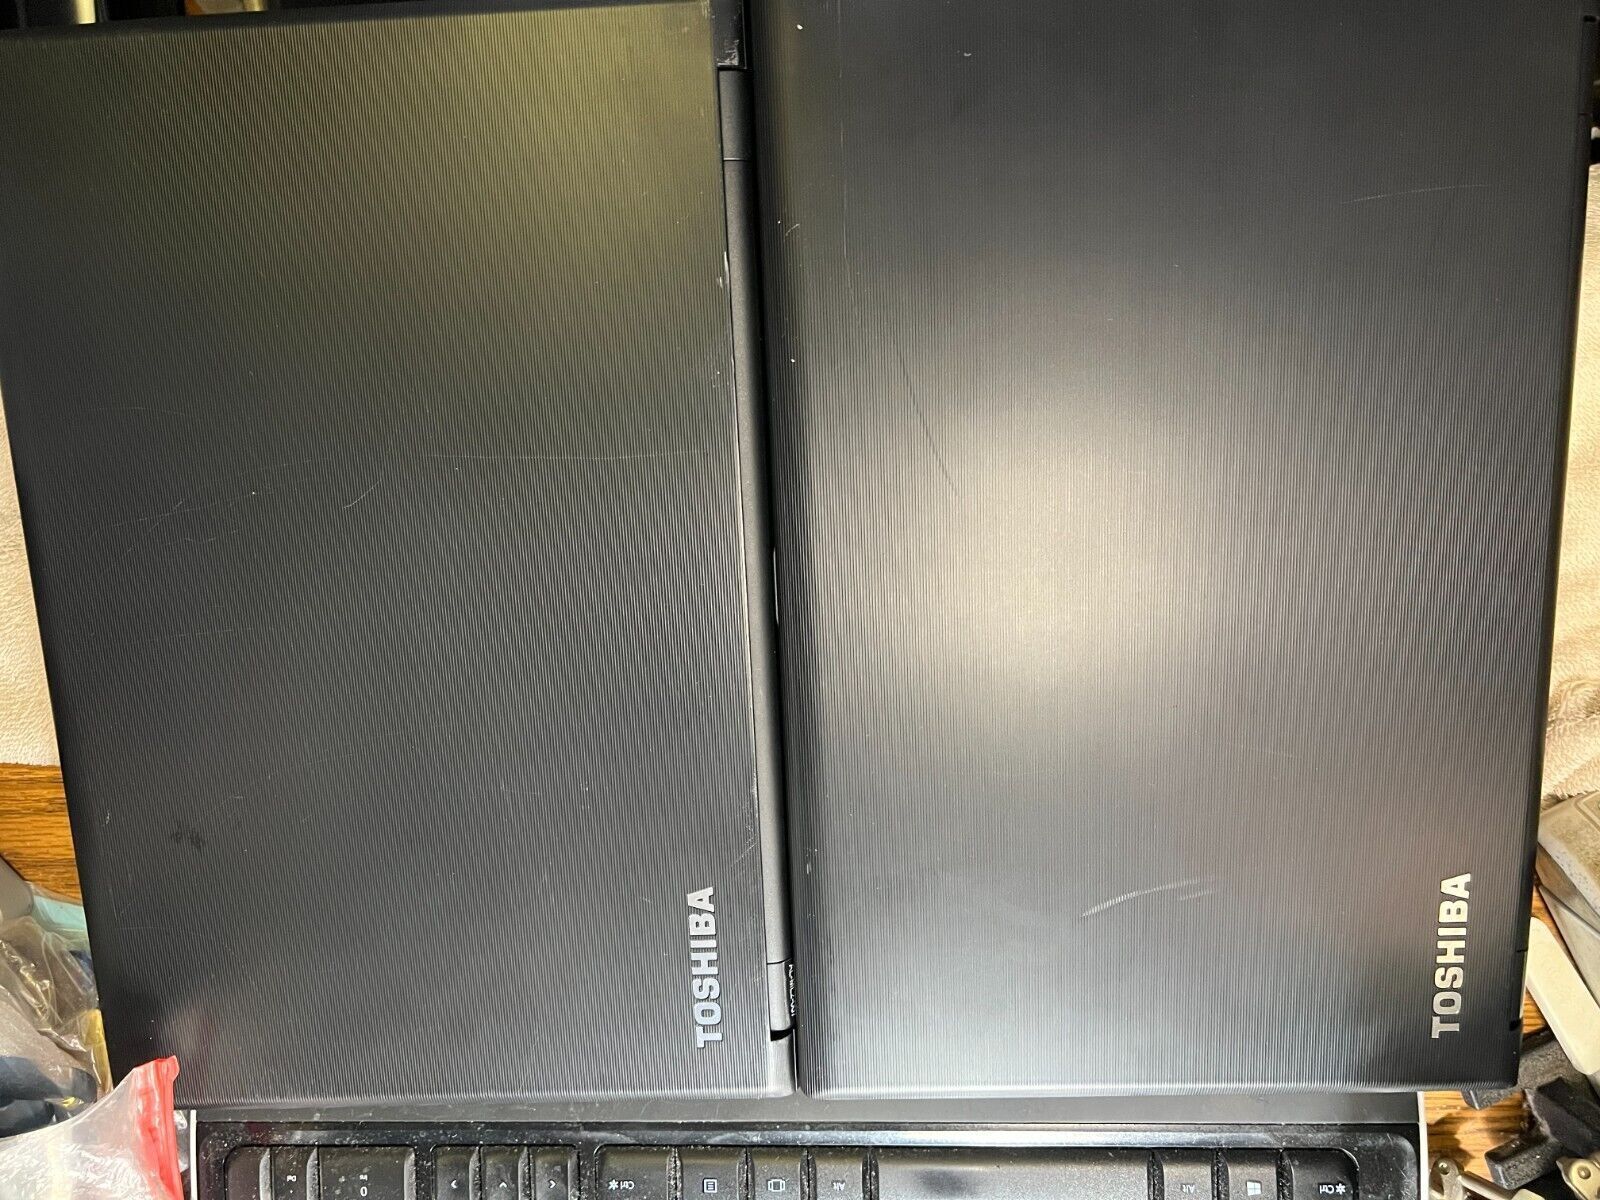 Laptop Toshiba - Intel i5 - 500 gig HD - Windows 10 Pro - 4gig Ram - #1